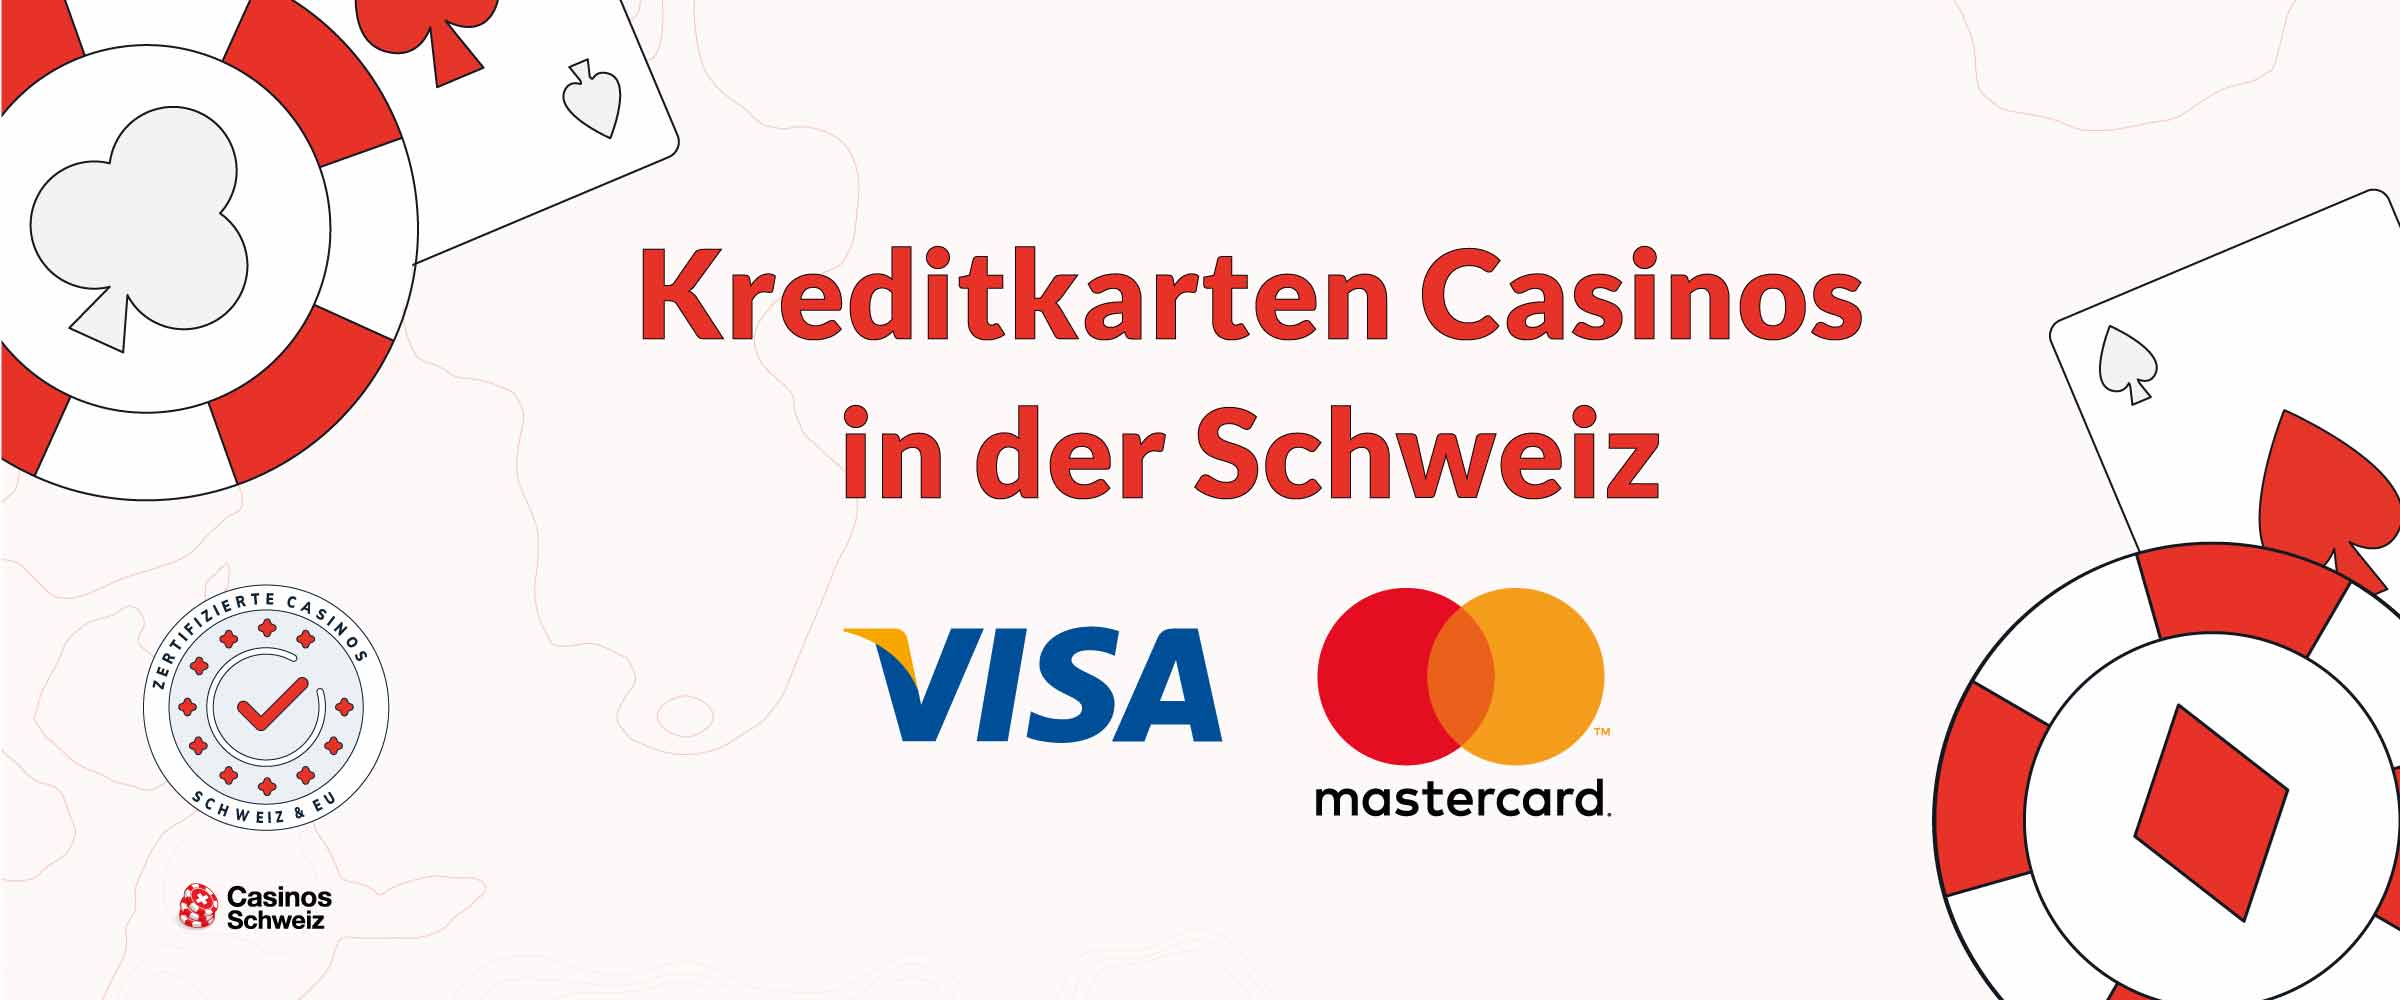 Kreditkarten Casinos Schweiz